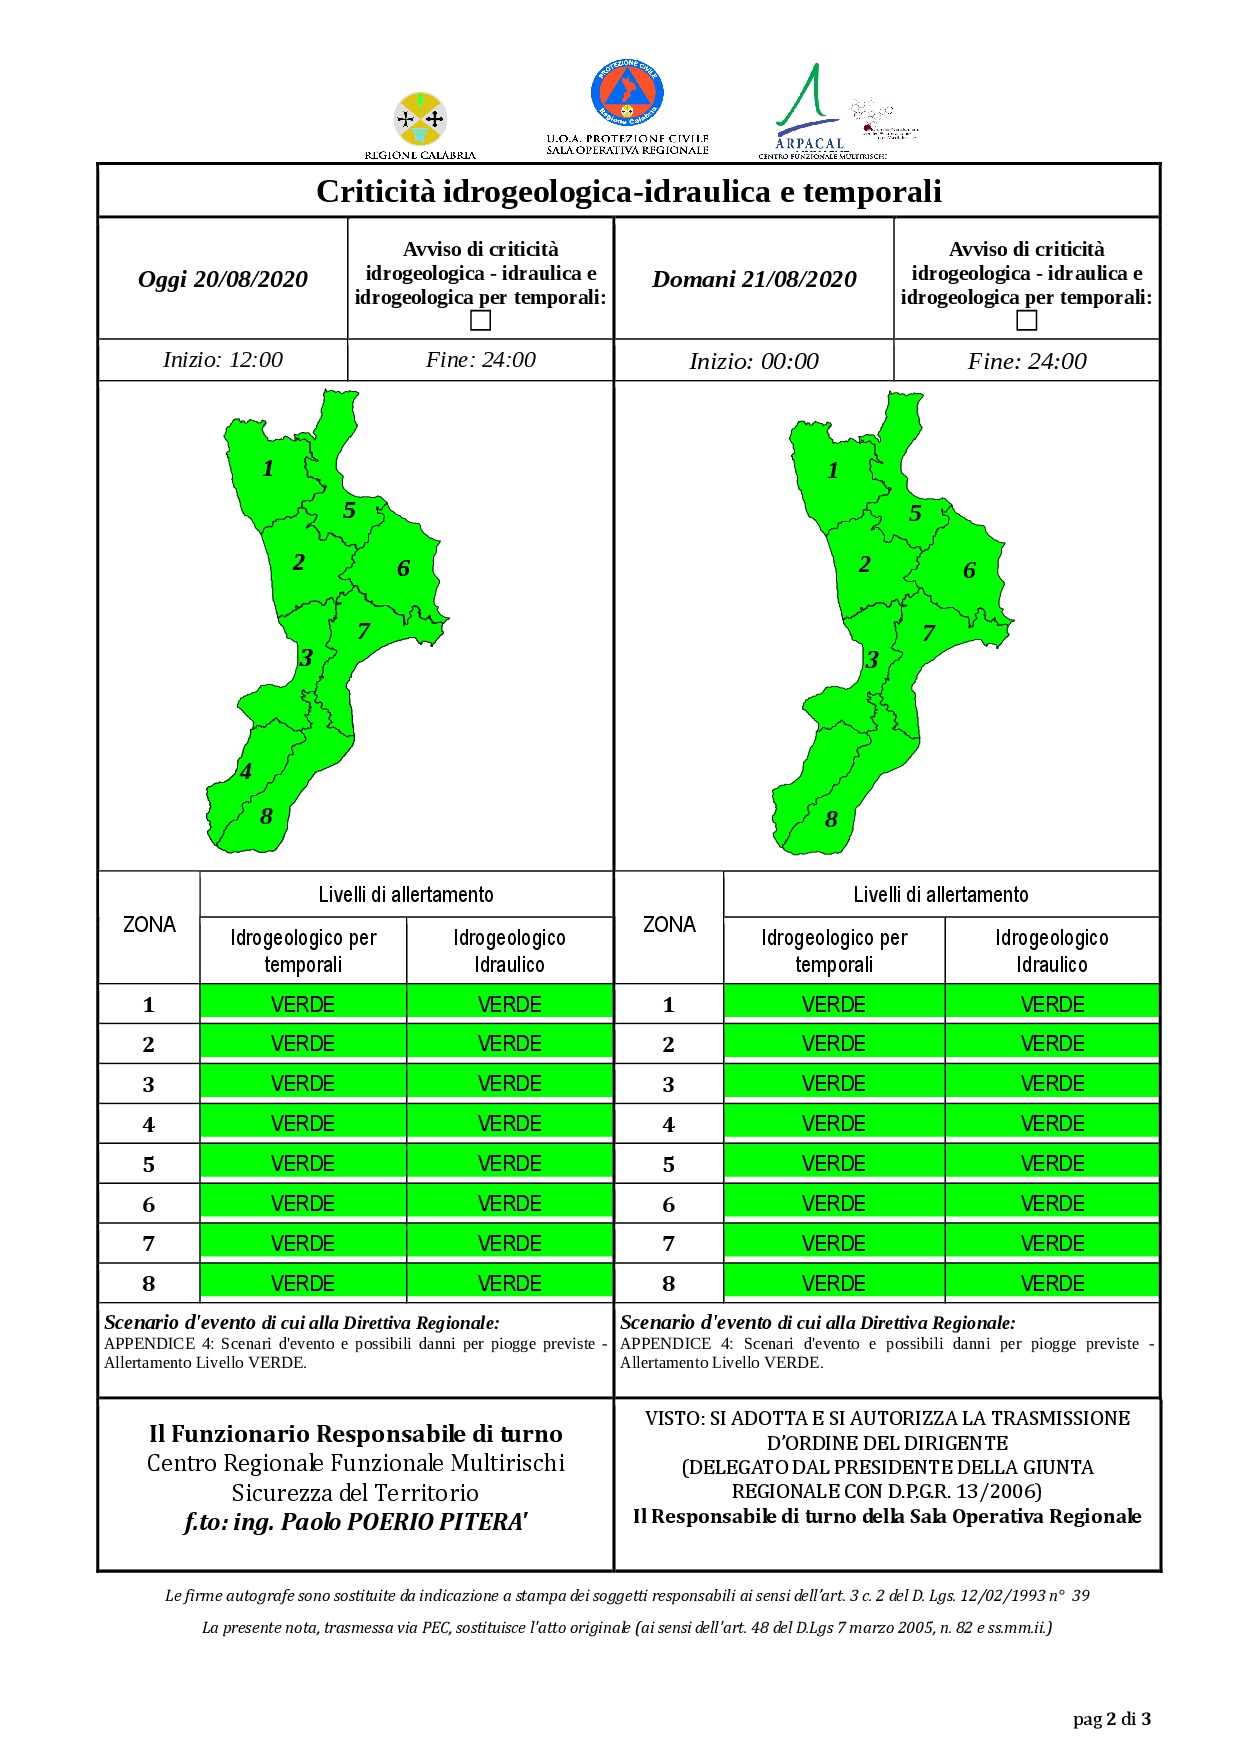 Criticità idrogeologica-idraulica e temporali in Calabria 20-08-2020